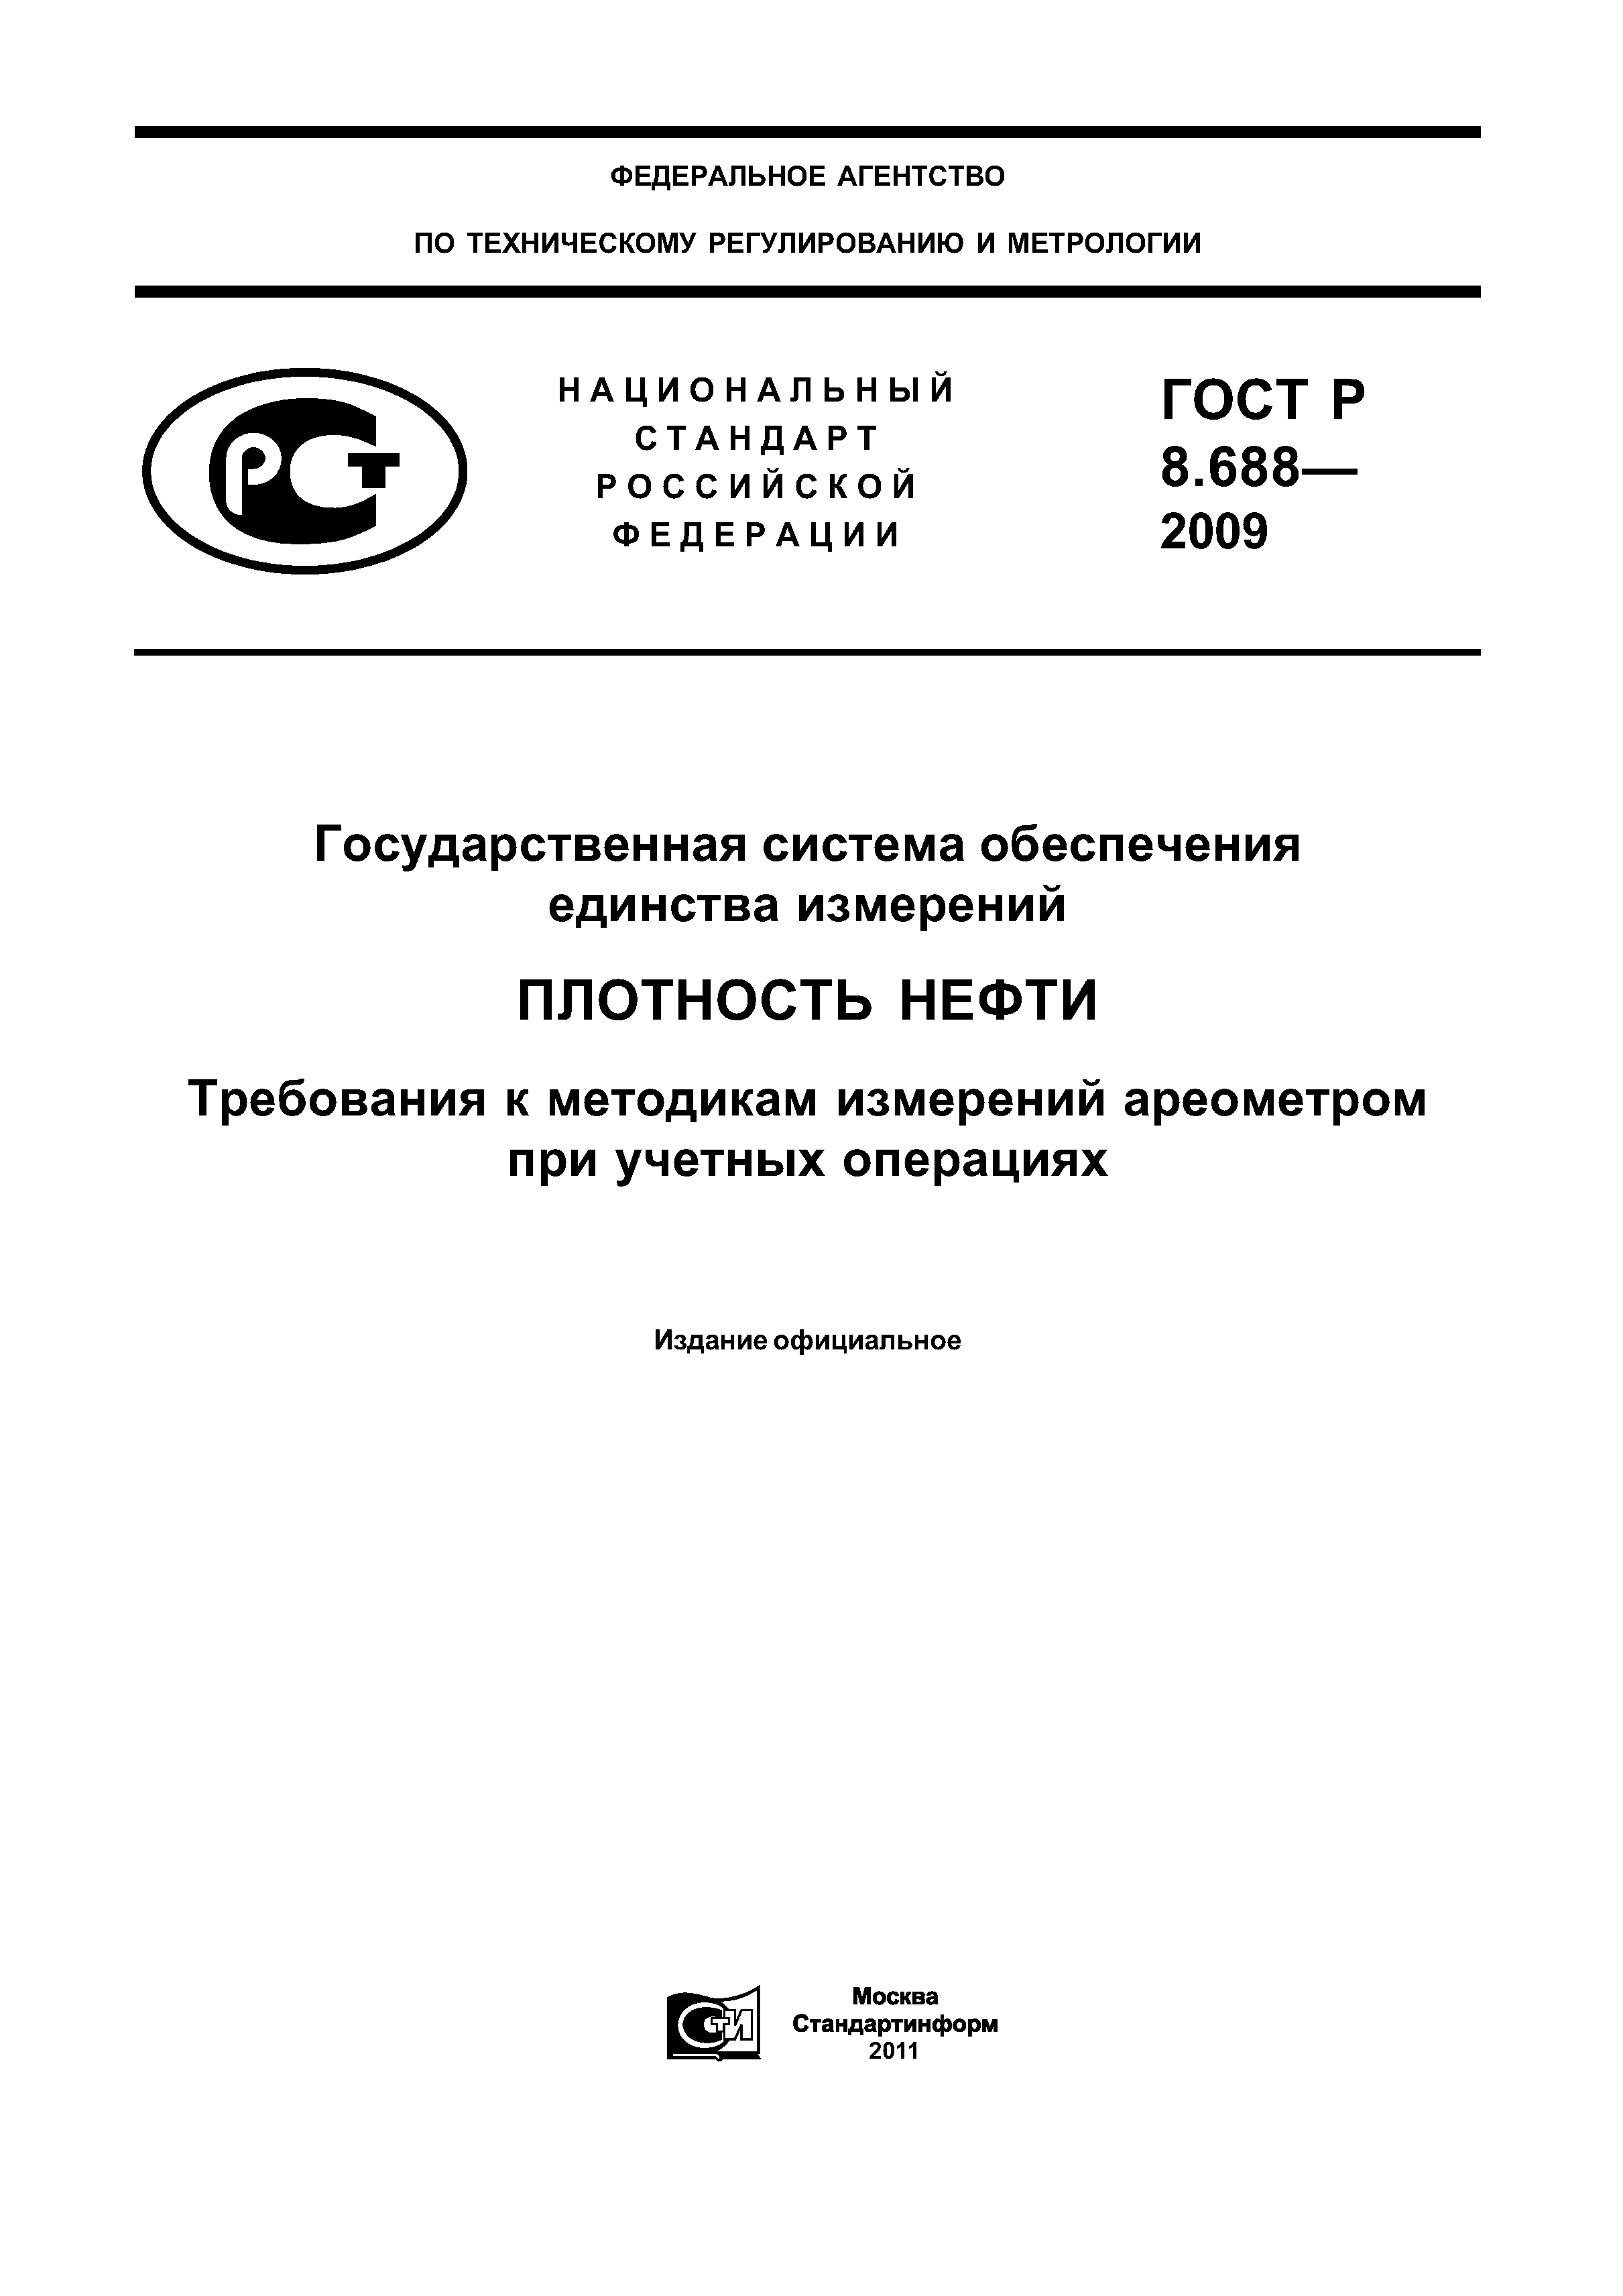 ГОСТ Р 8.688-2009